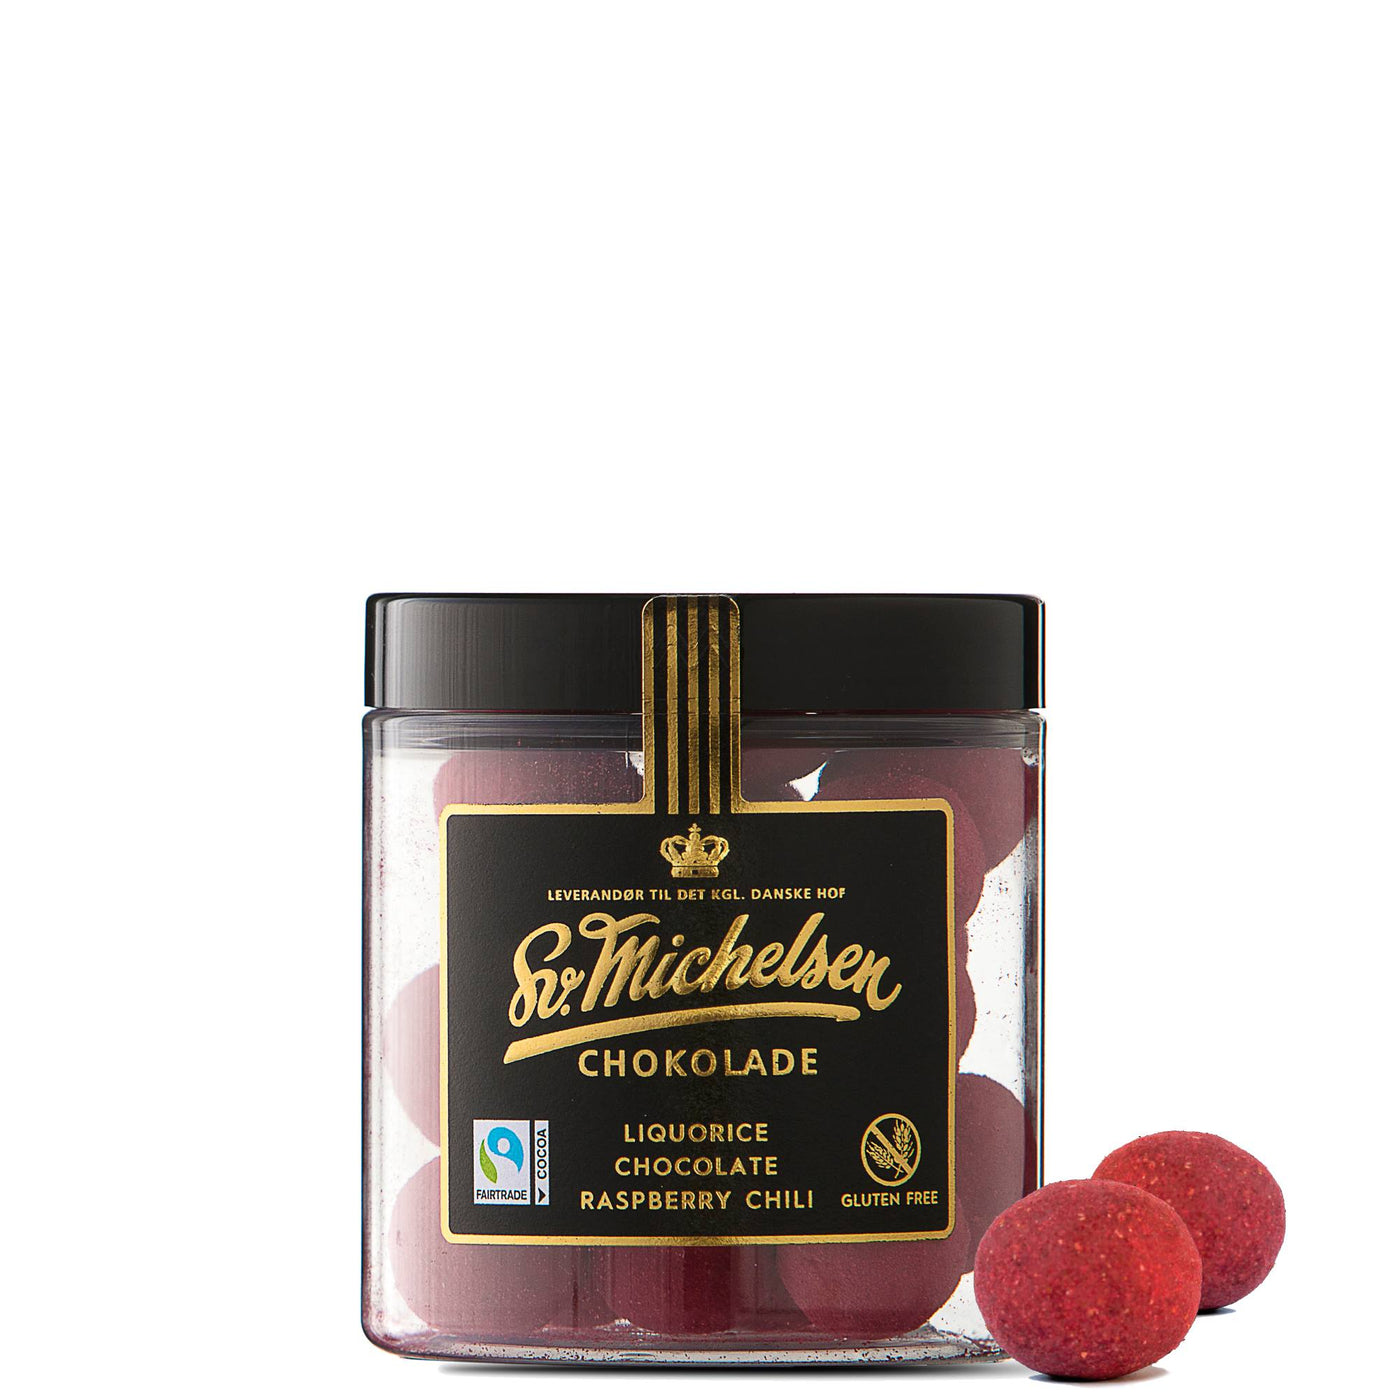 Sv. Michelsen - Liquorice, Chocolate Raspberry & Chili - Danish Lakrids